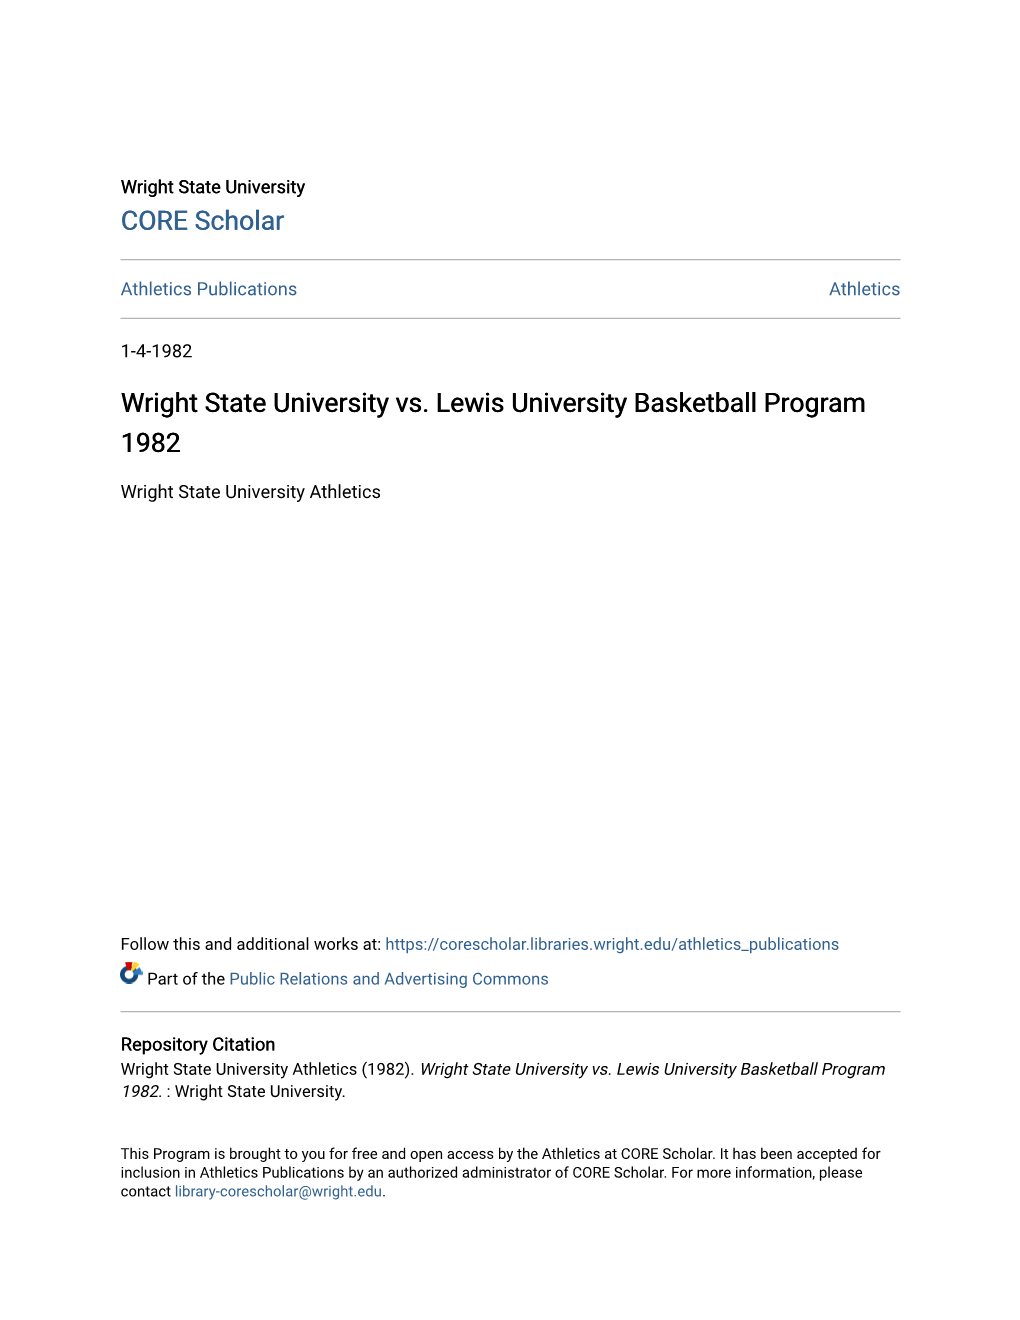 Wright State University Vs. Lewis University Basketball Program 1982